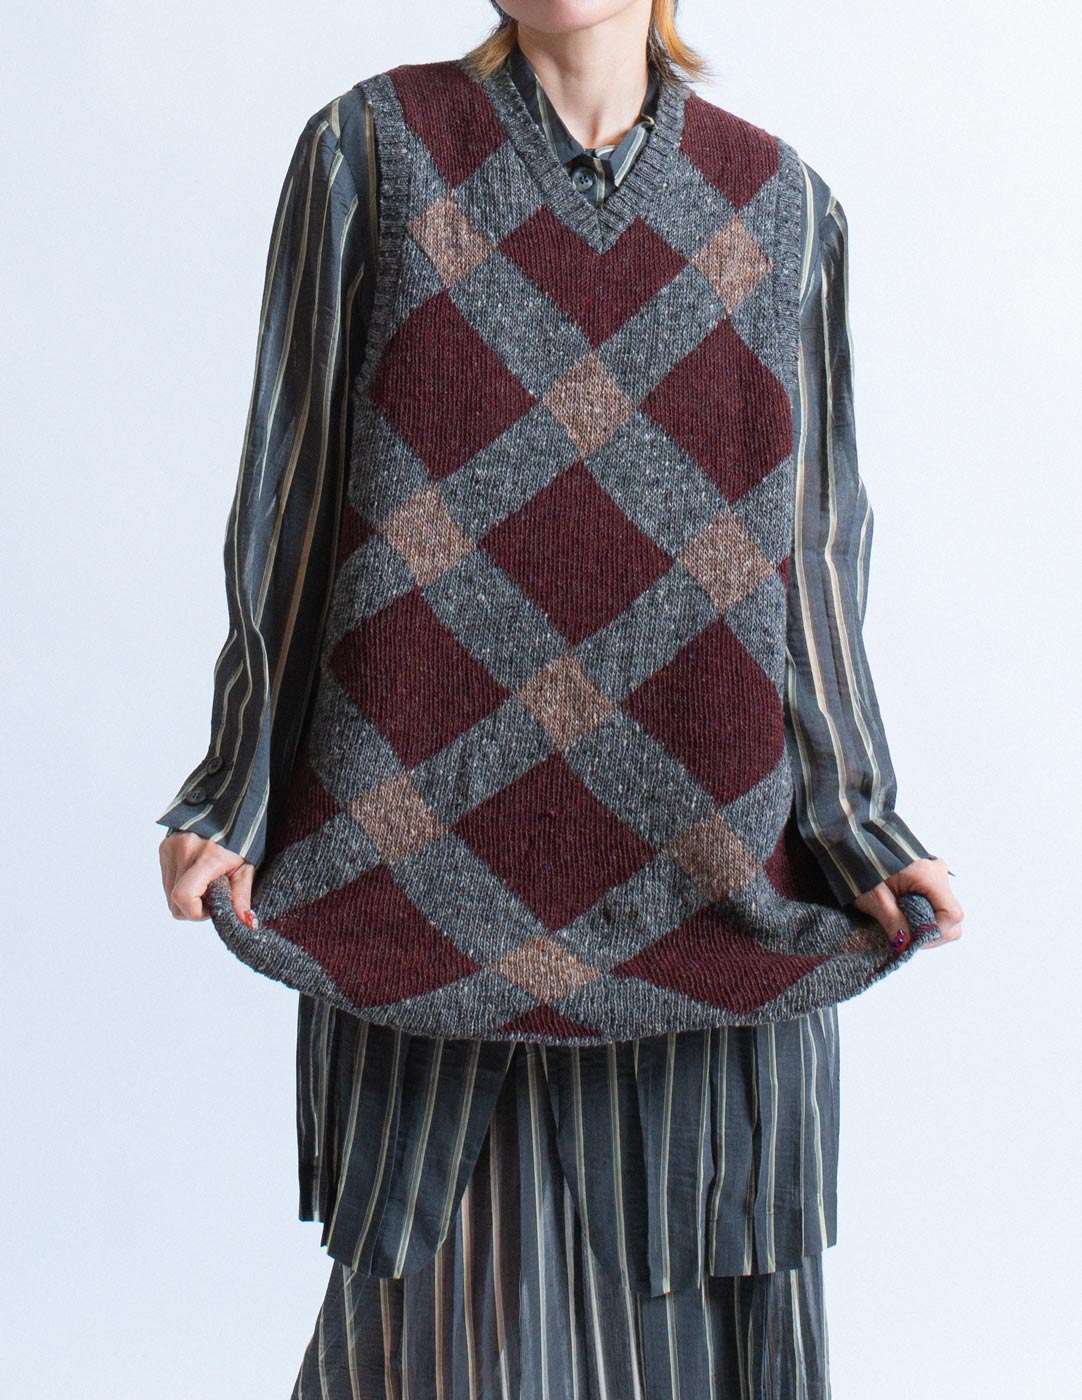 Comme des Garçons vintage argyle patterned knit vest front detail